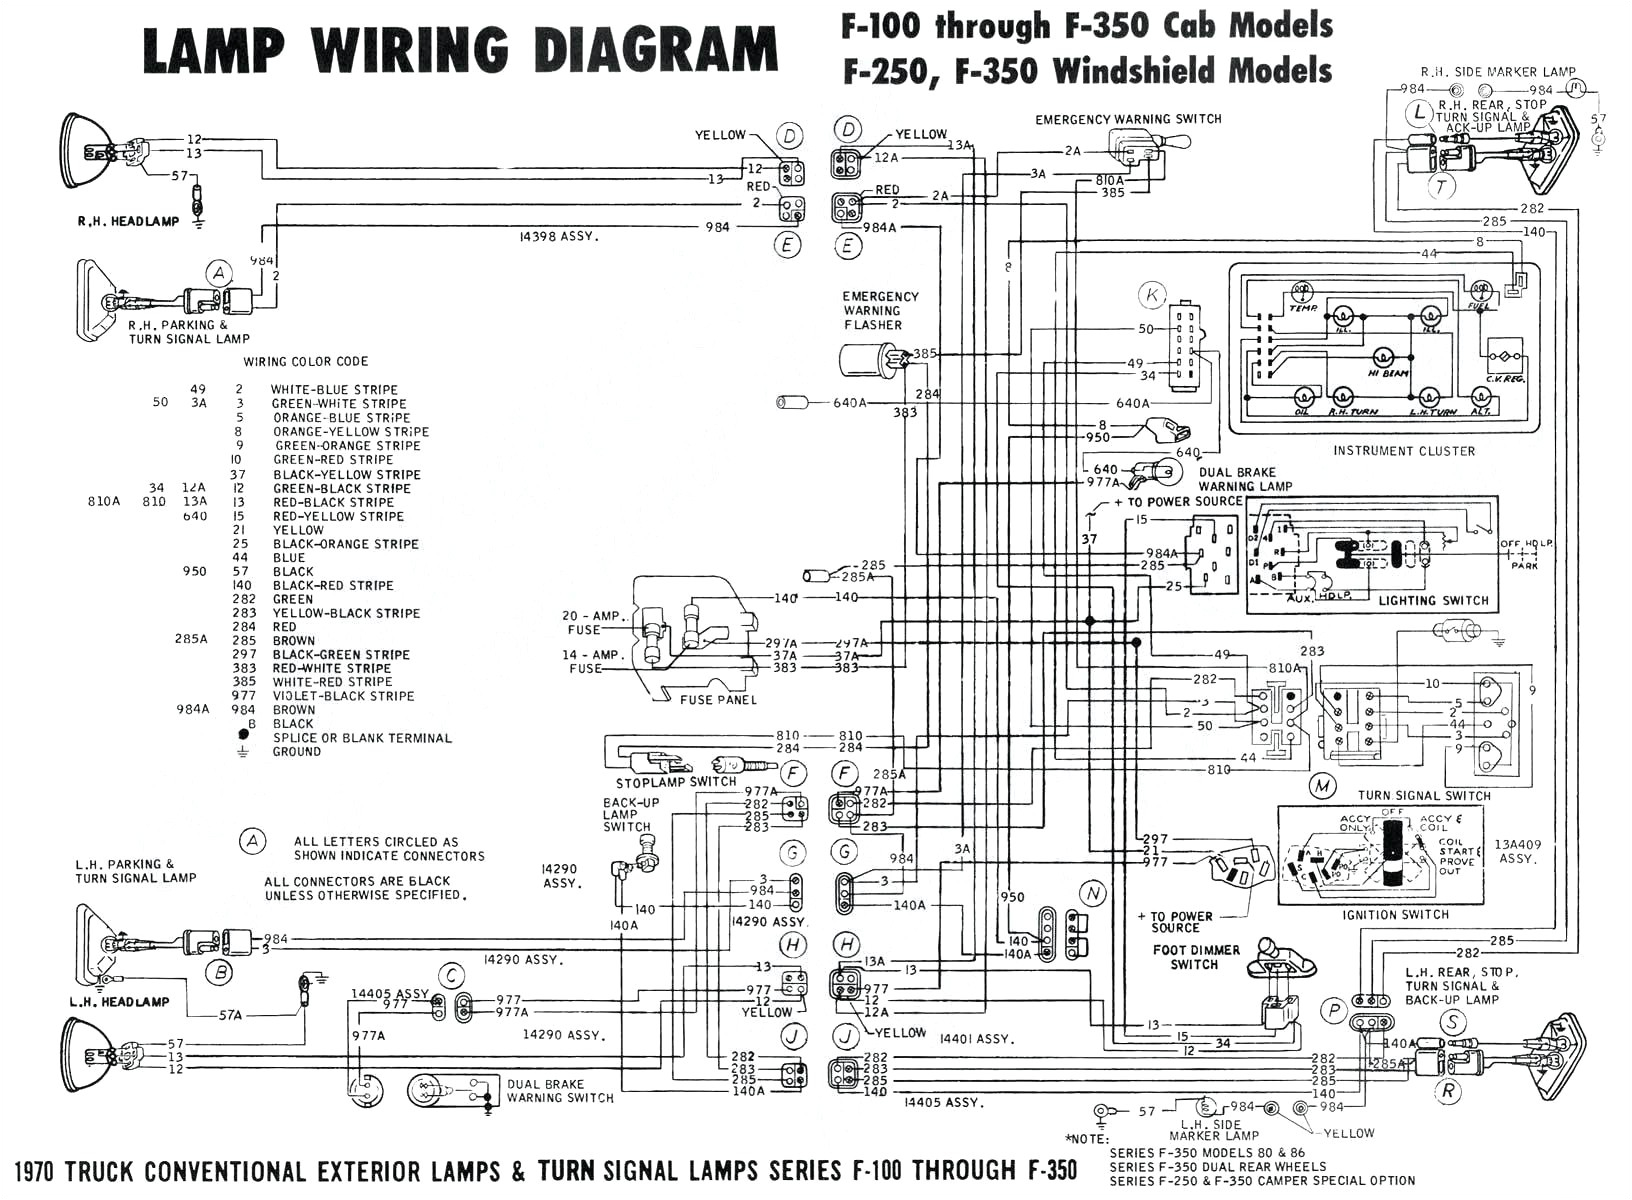 1951 ferrari wiring harness wiring diagram mega 1951 ferrari wiring harness